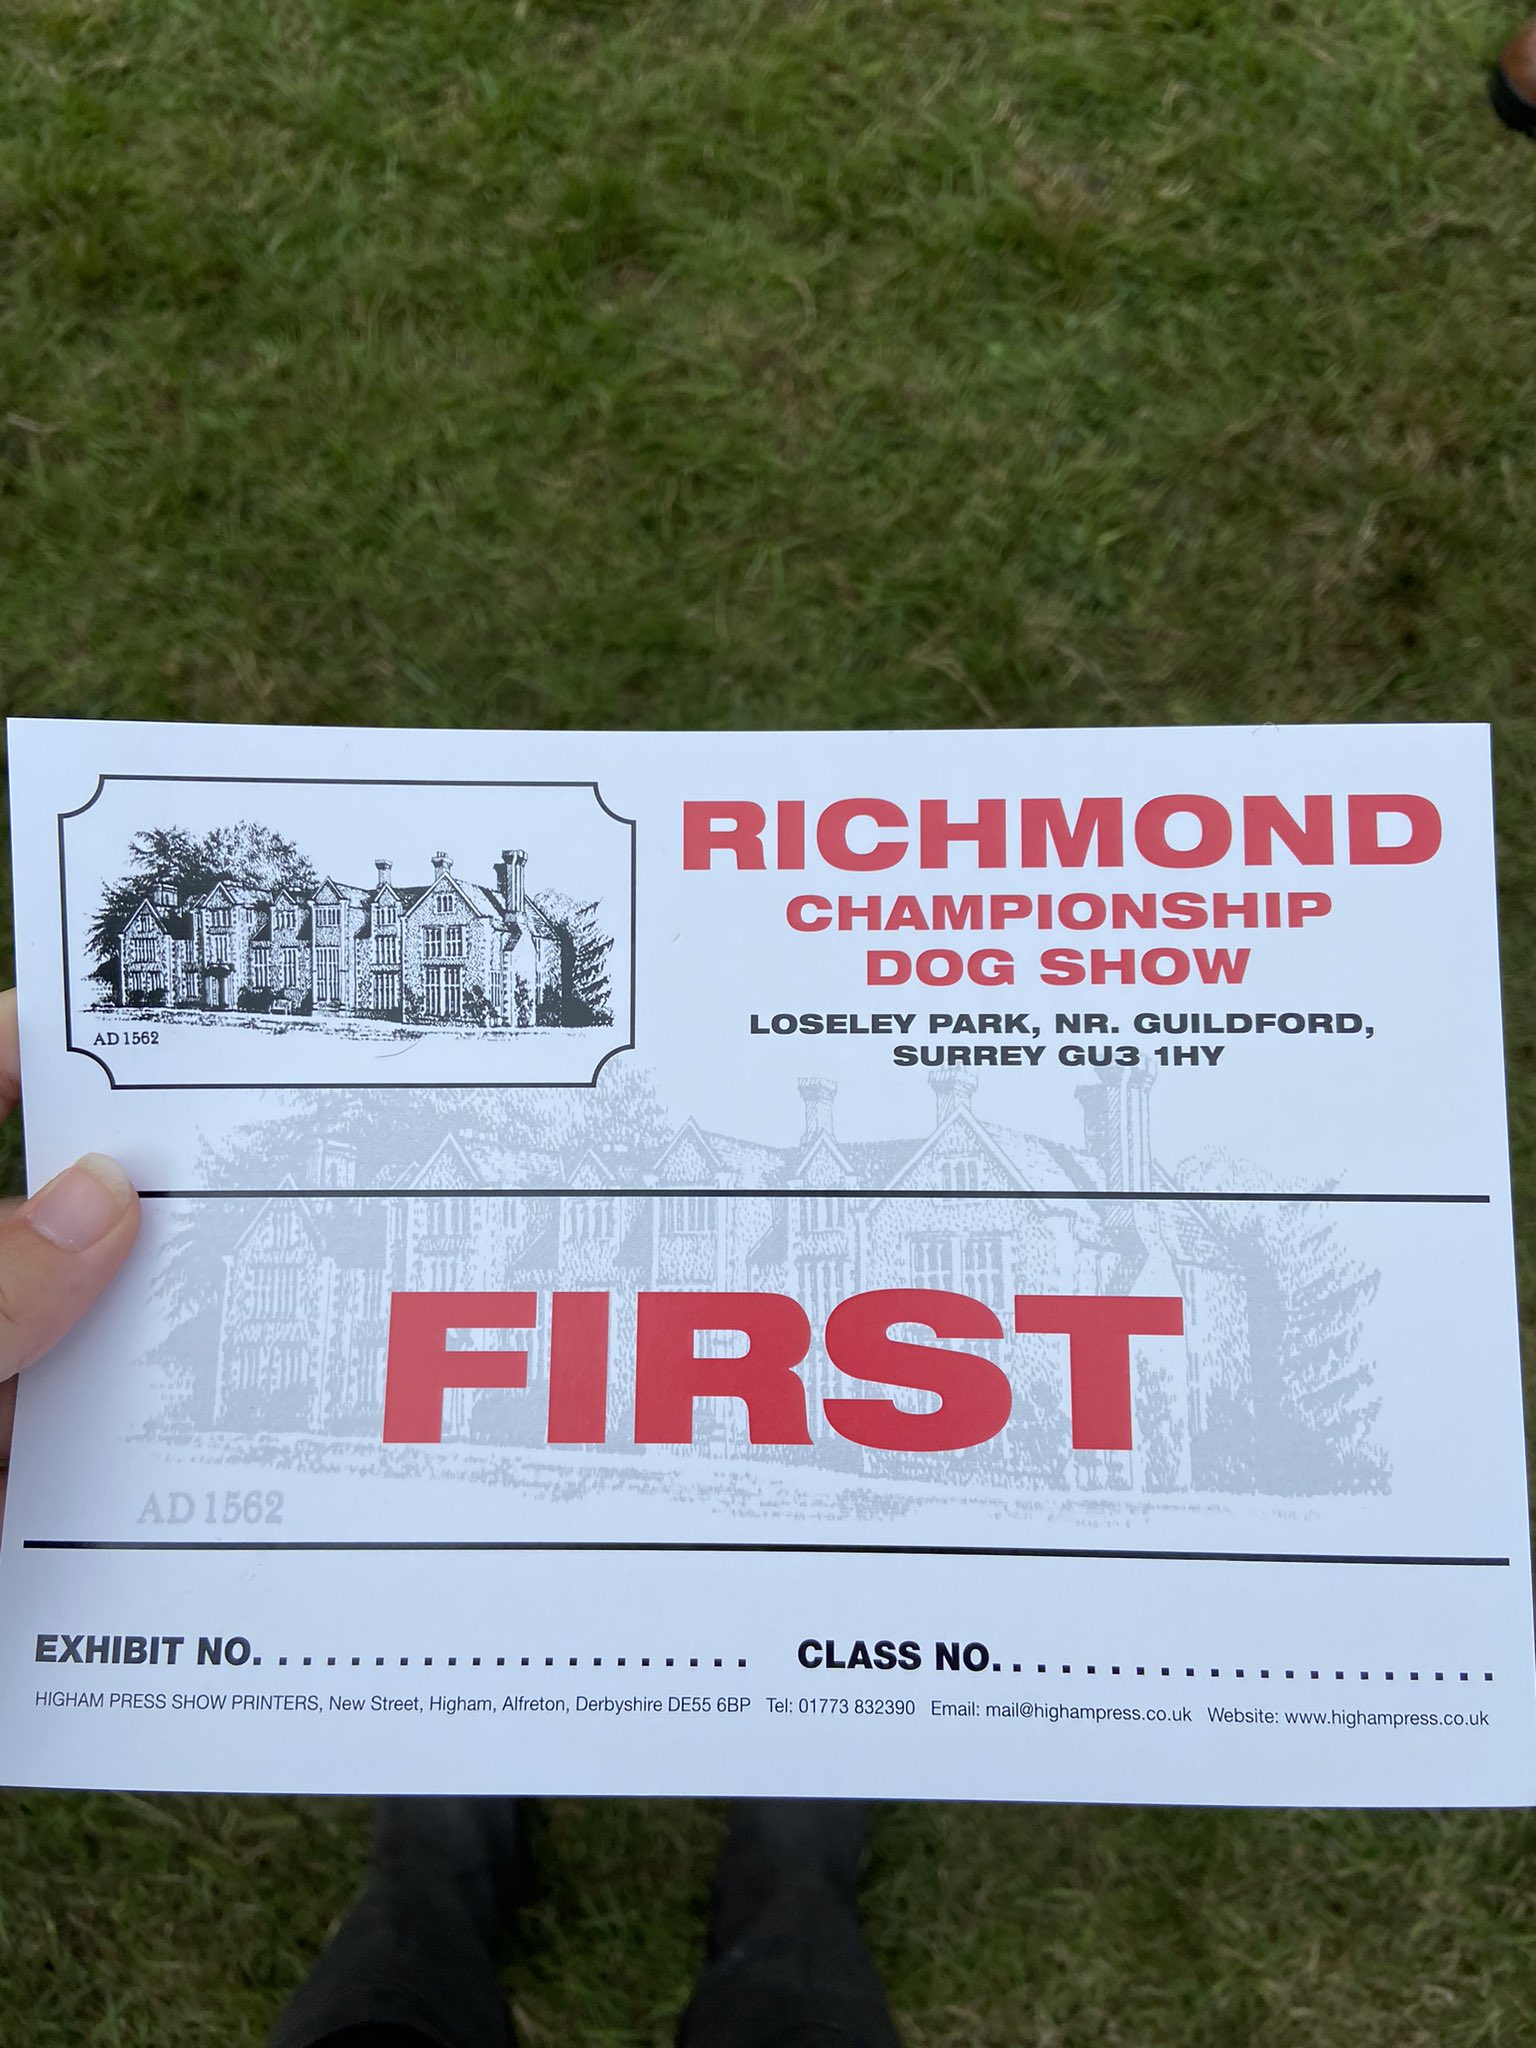 RICHMOND CHAMPIONSHIP DOG SHOW